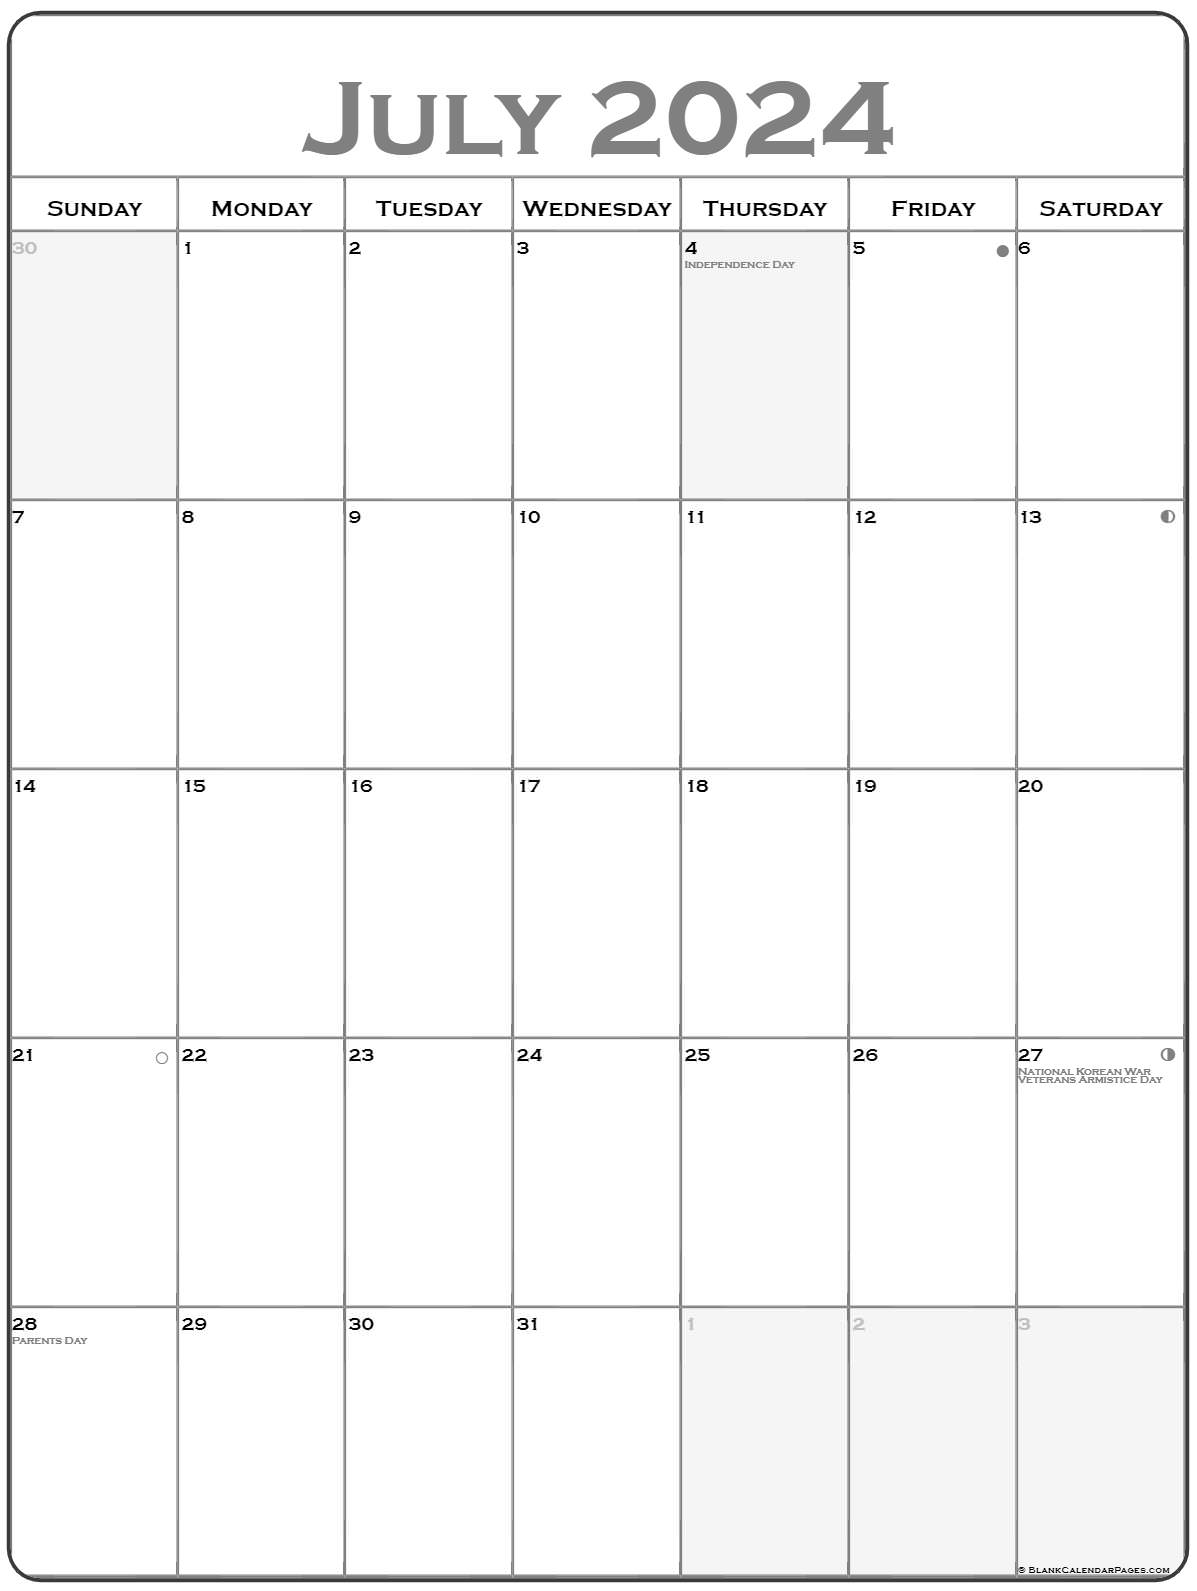 july 2023 calendar free printable calendar - july 2023 calendar free ...